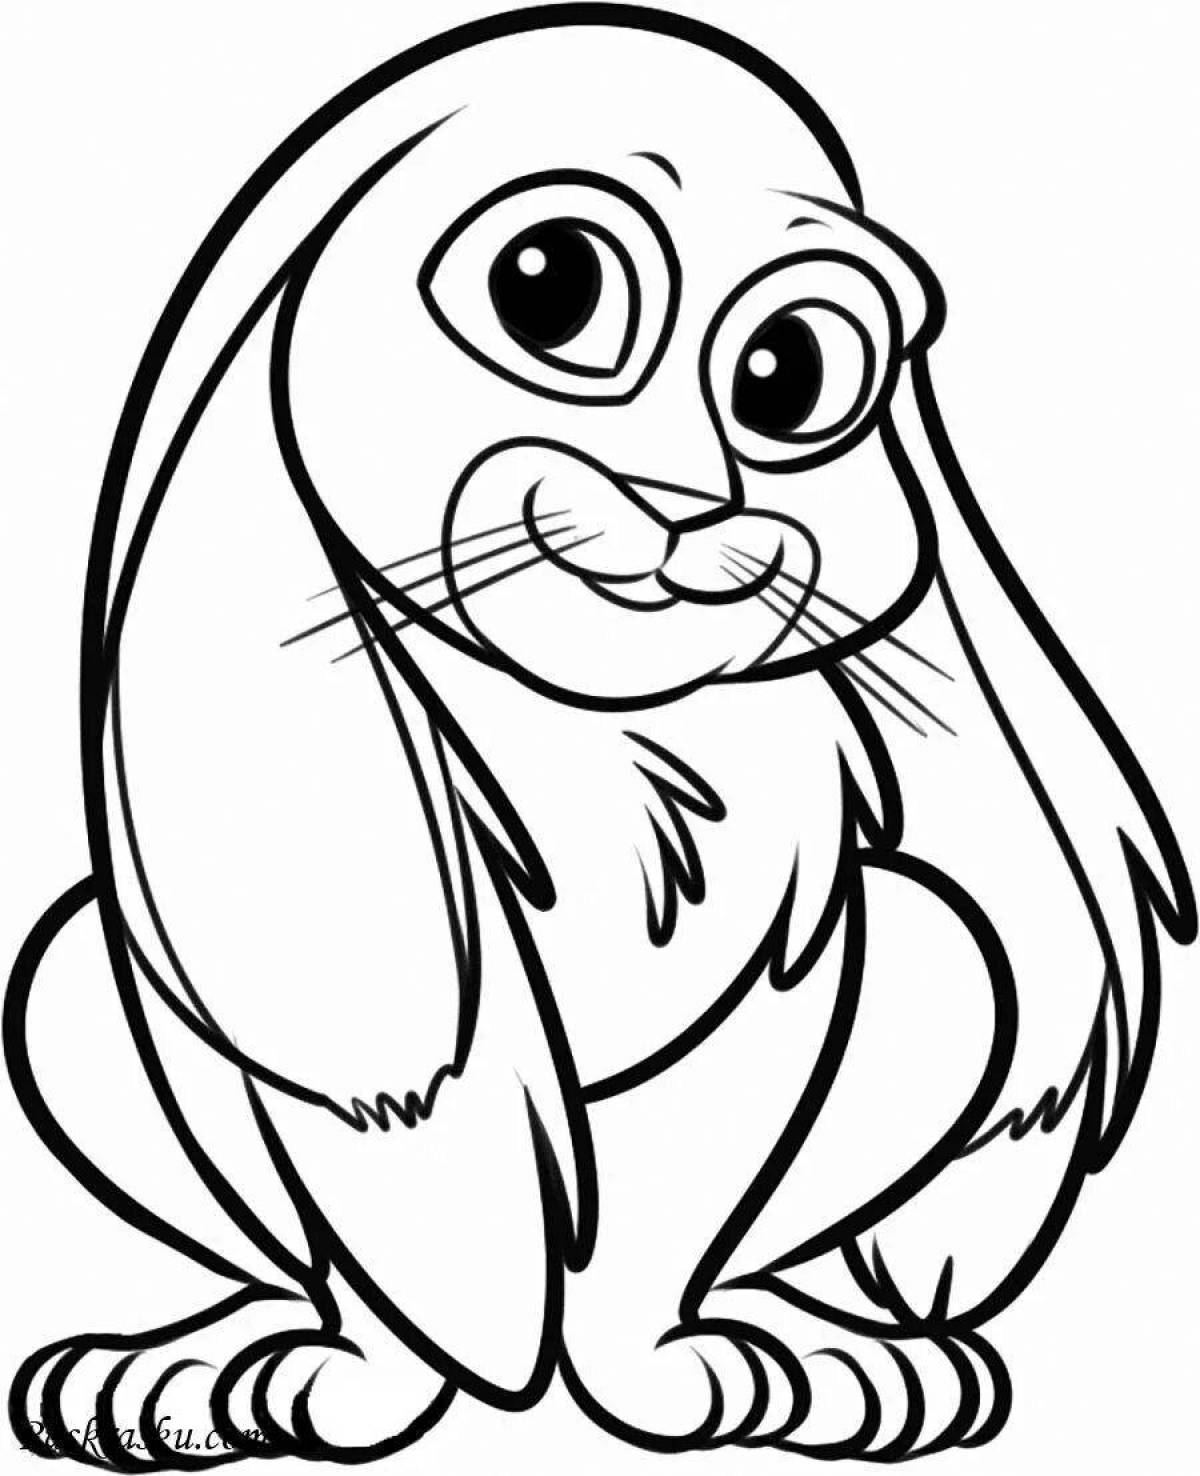 Fun coloring page princess bunny